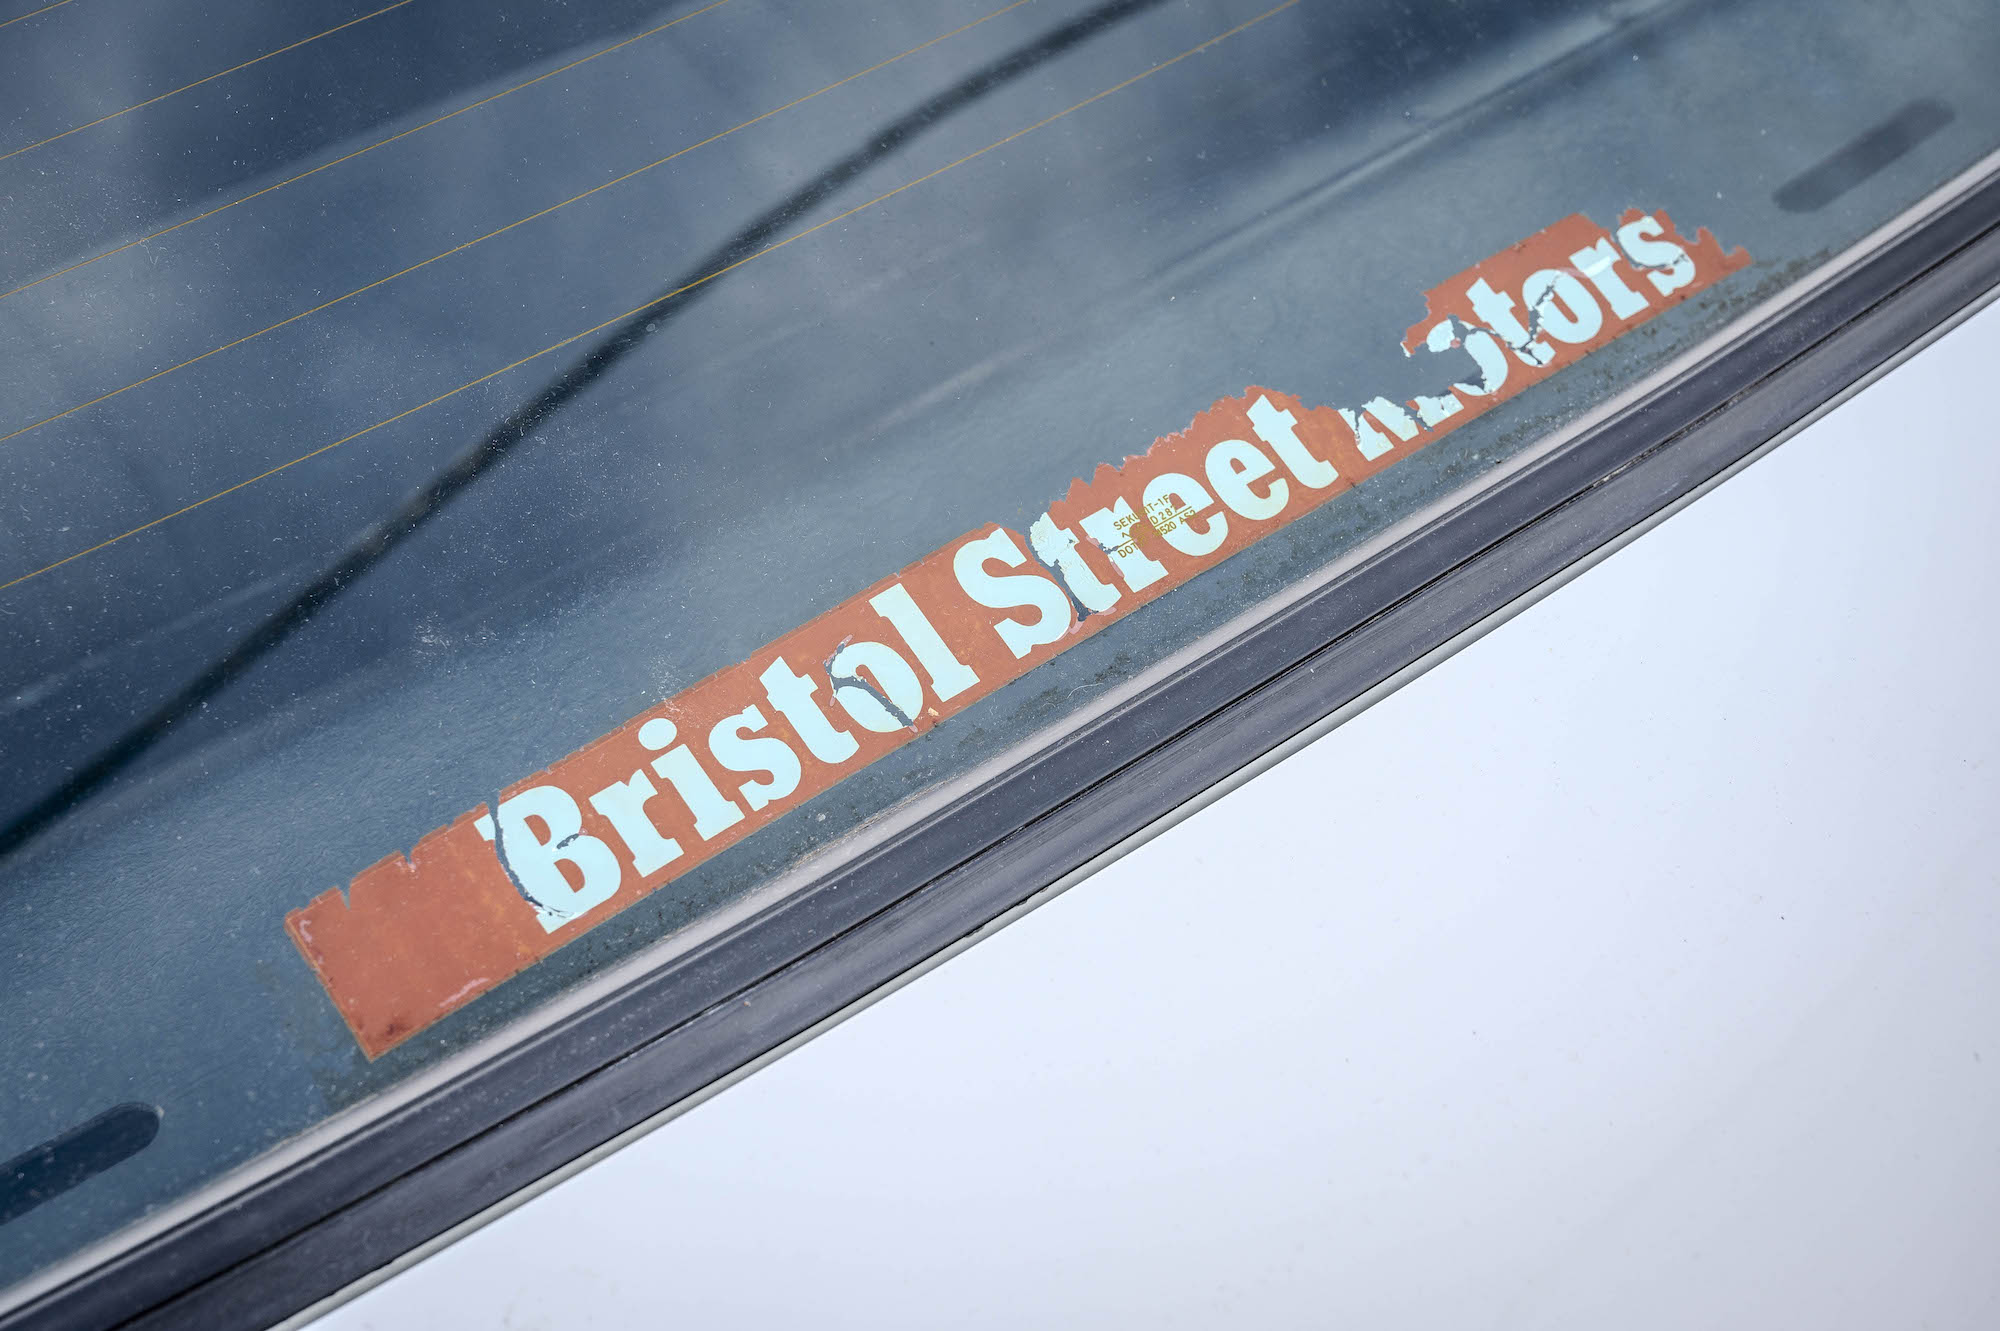 Bristol Street Motors sticker